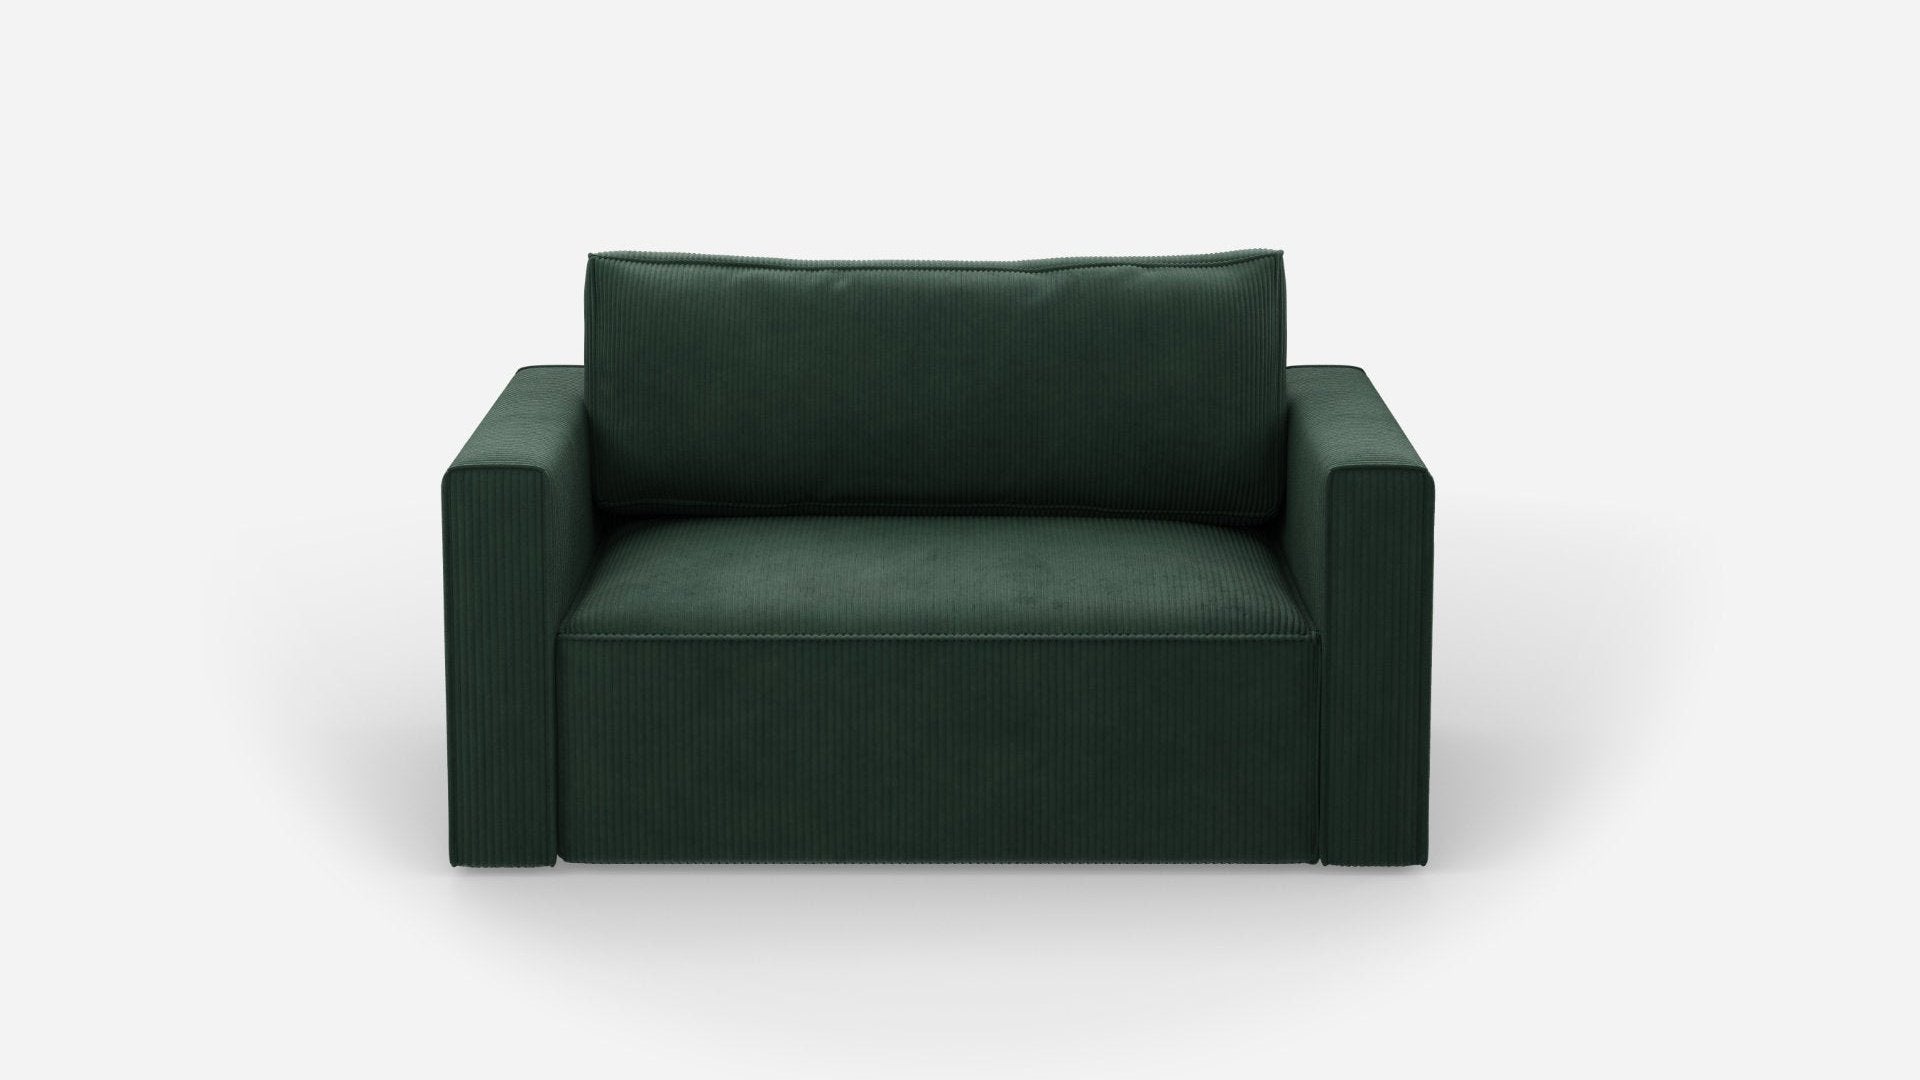 Sofa 2-osobowa Benet BlockDL Sztruks - myBenet